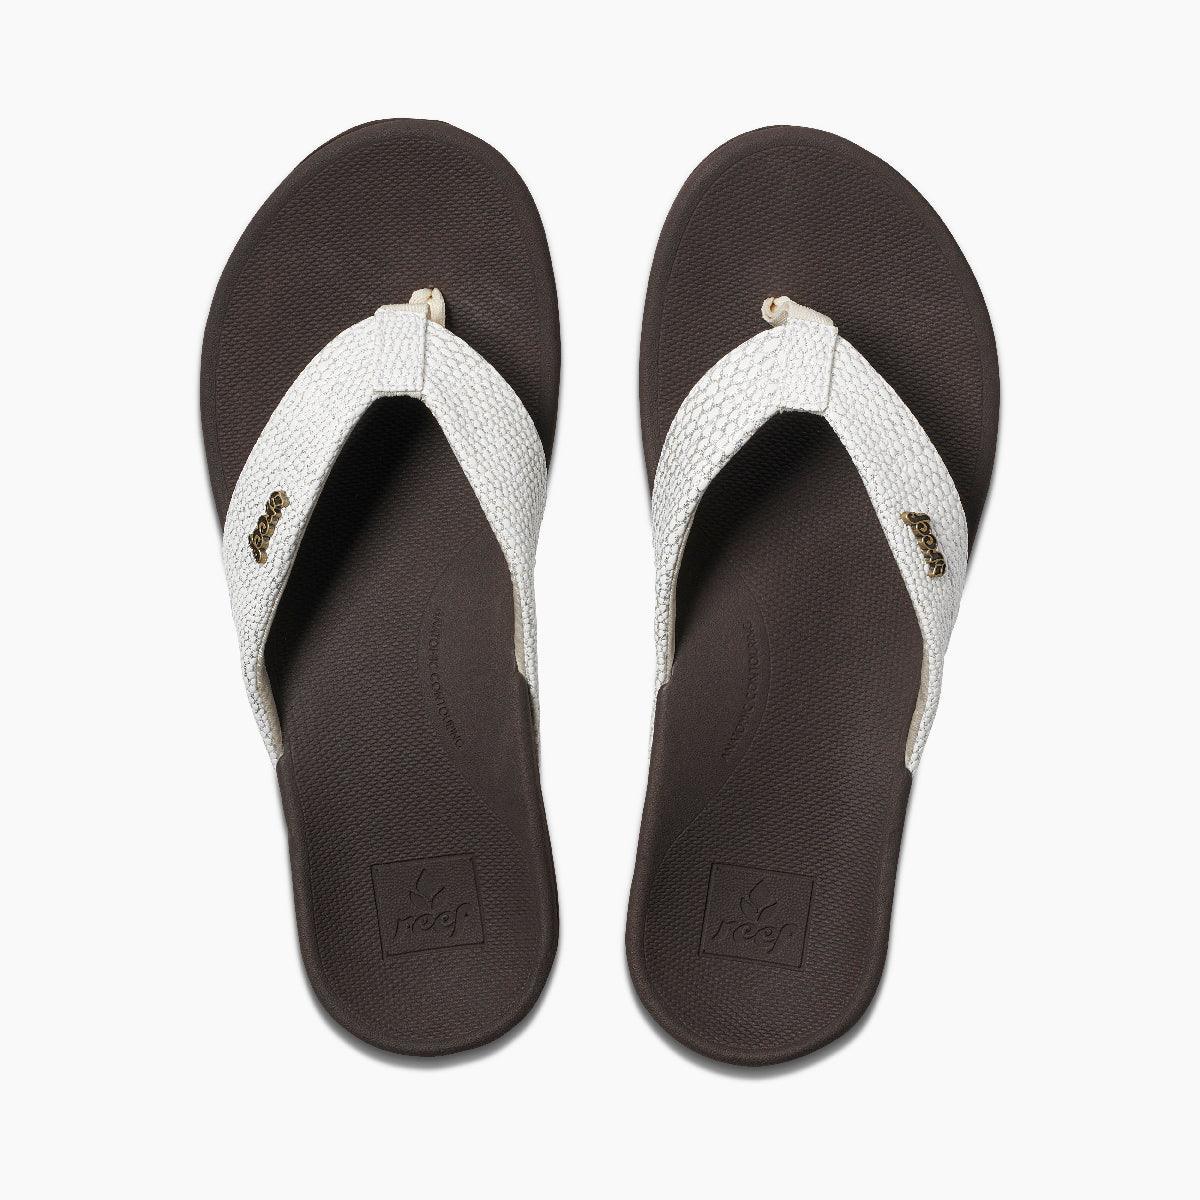 Reef Ortho-Spring Brown/ White Women's Flip-Flop Sandal - Women's SandalReef